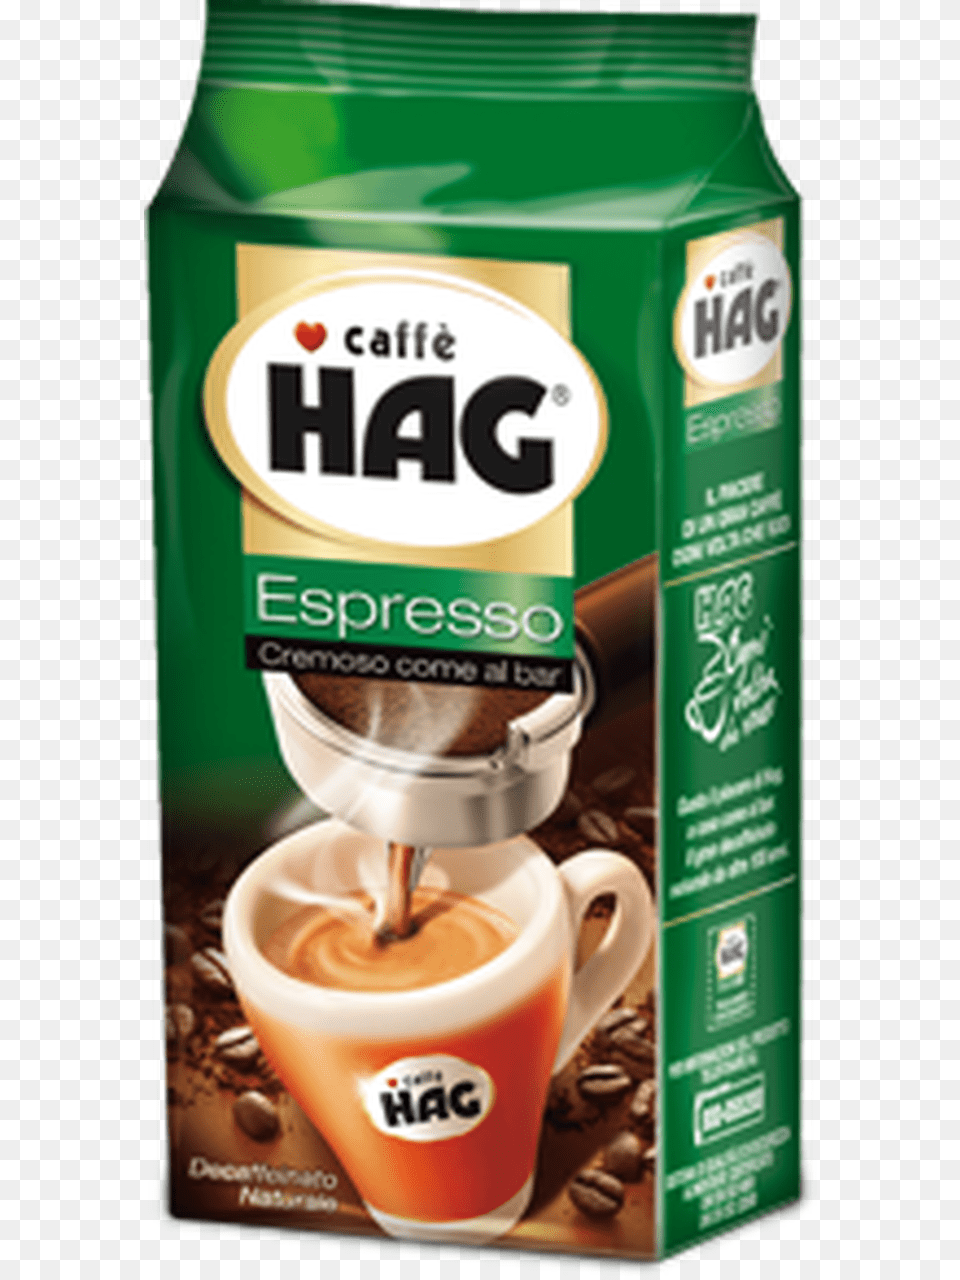 Caffe Hag Espresso Decaf Coffee Brick Decaf Coffee, Cup, Beverage, Coffee Cup Free Png Download